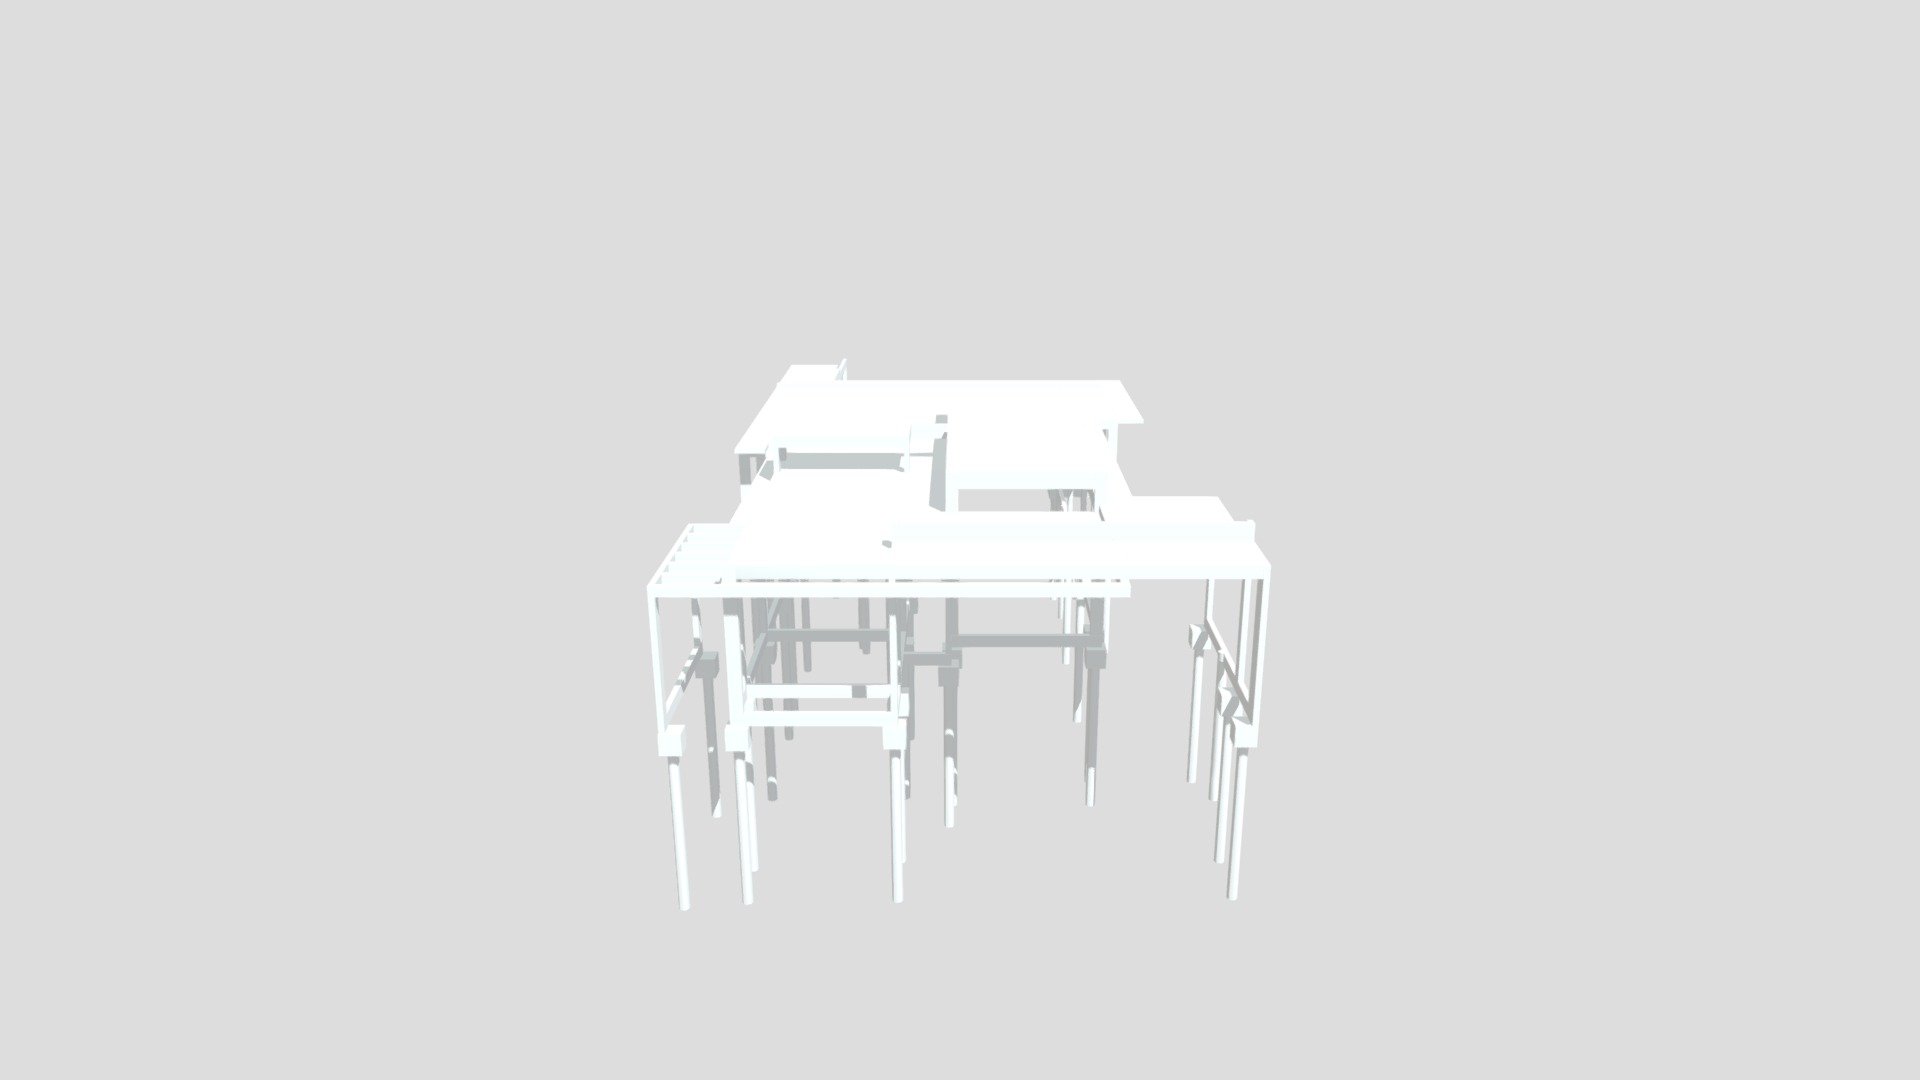 202303 - 3D model by engjoaopedrolopes [df3c263] - Sketchfab